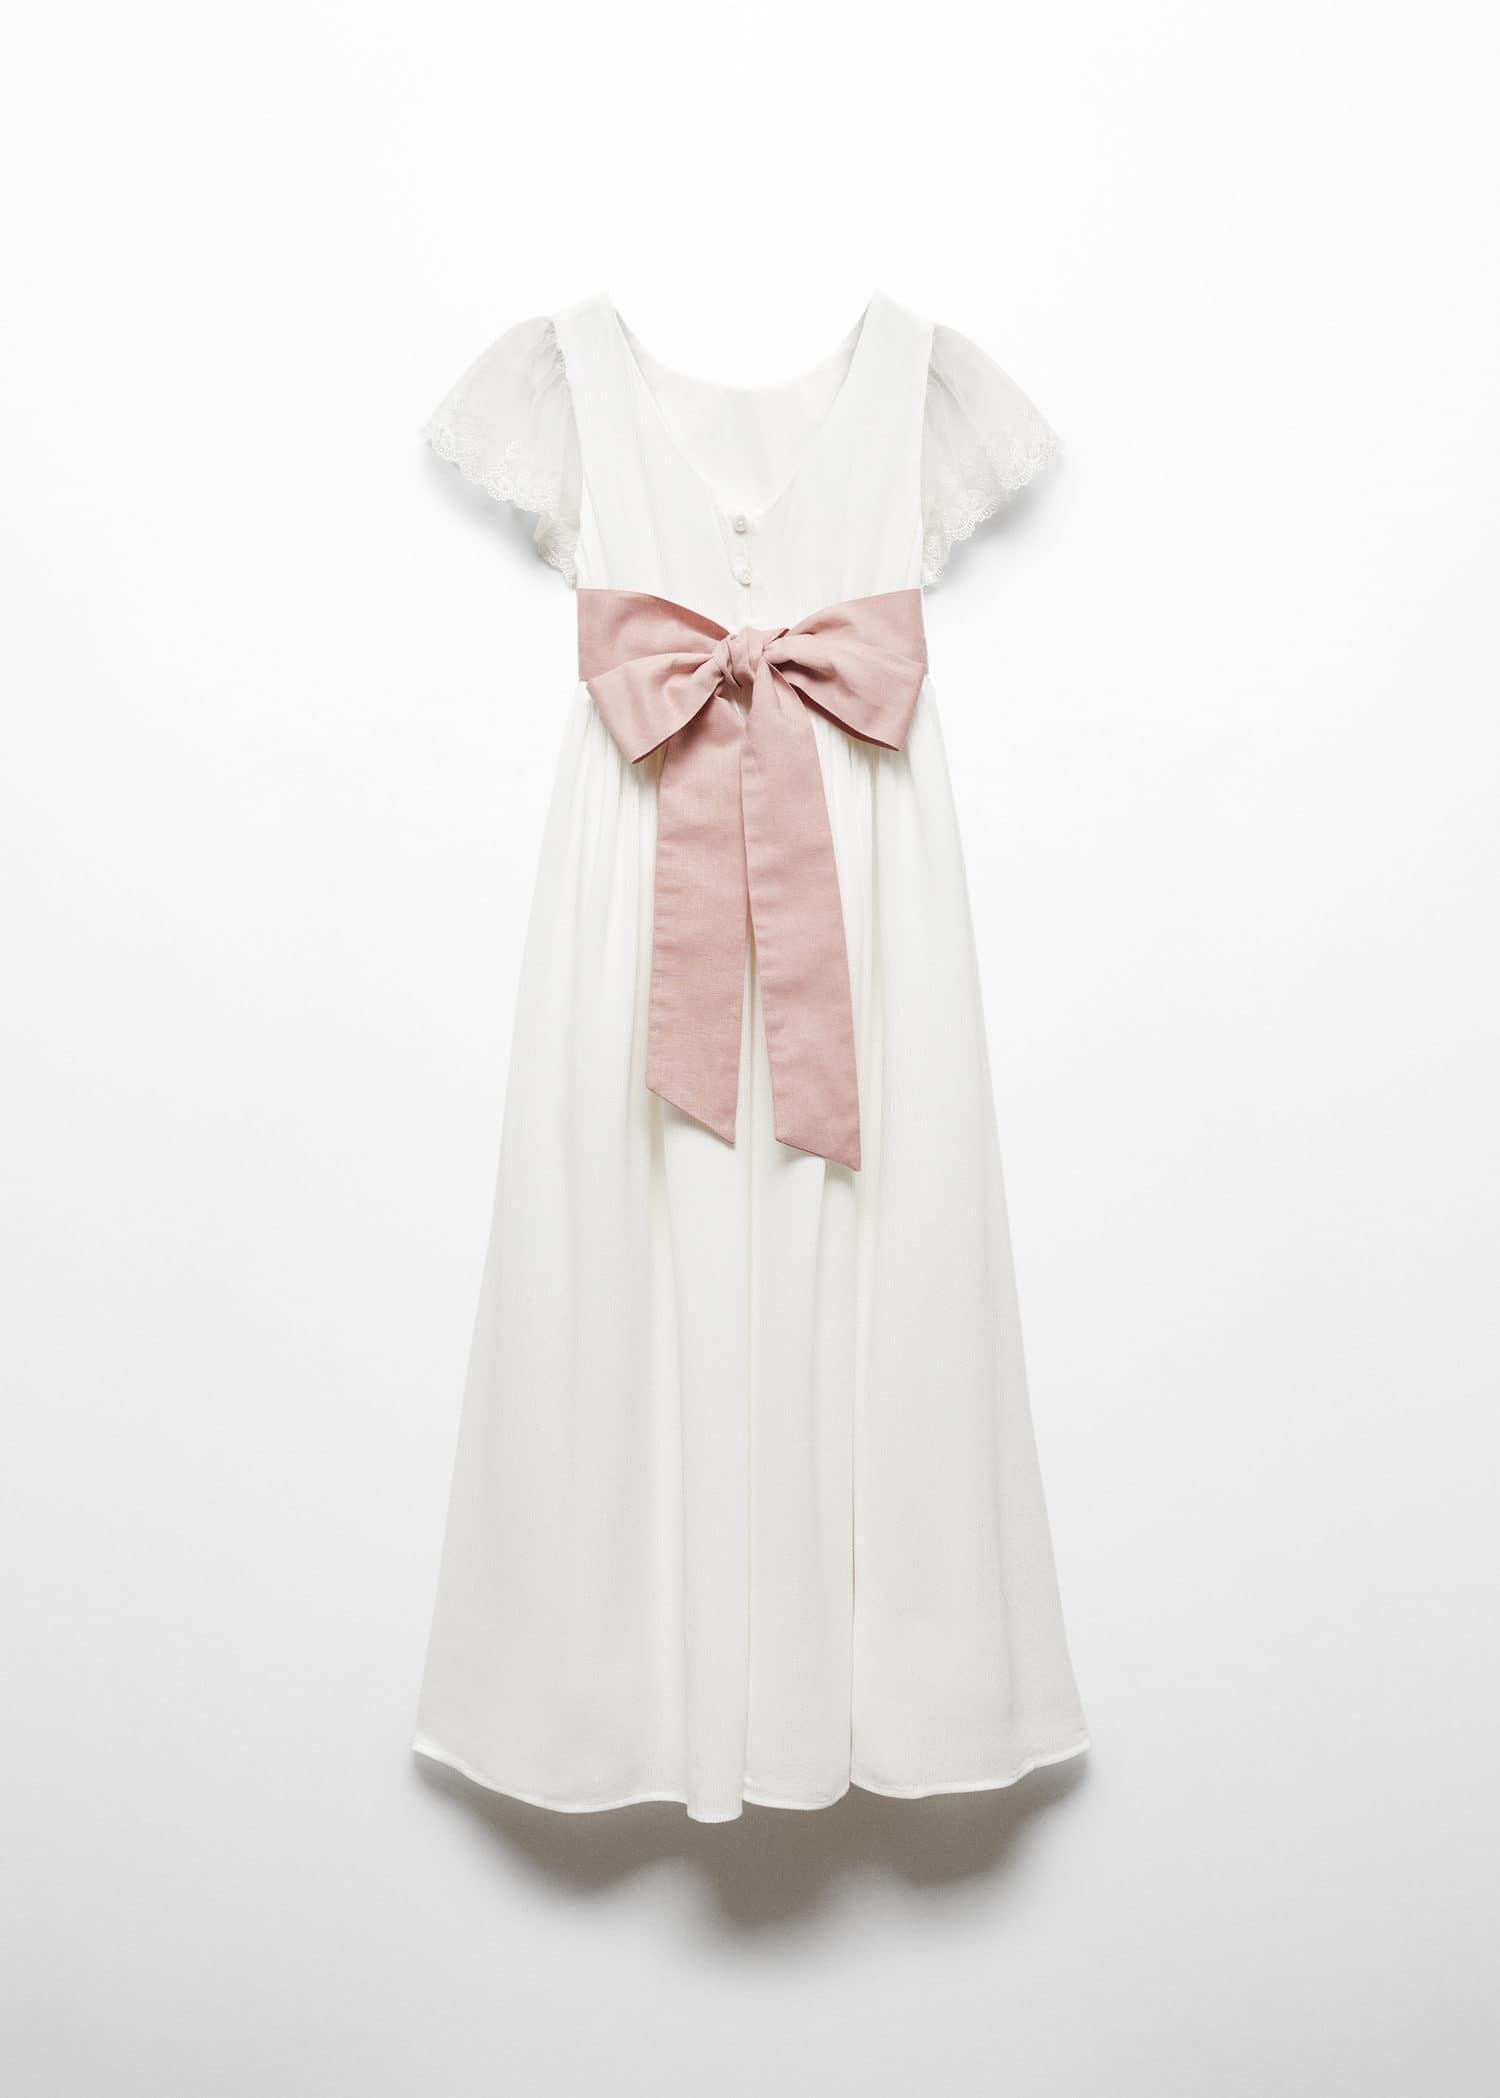 Mango - White Bow Embroidered Dress, Kids Girls